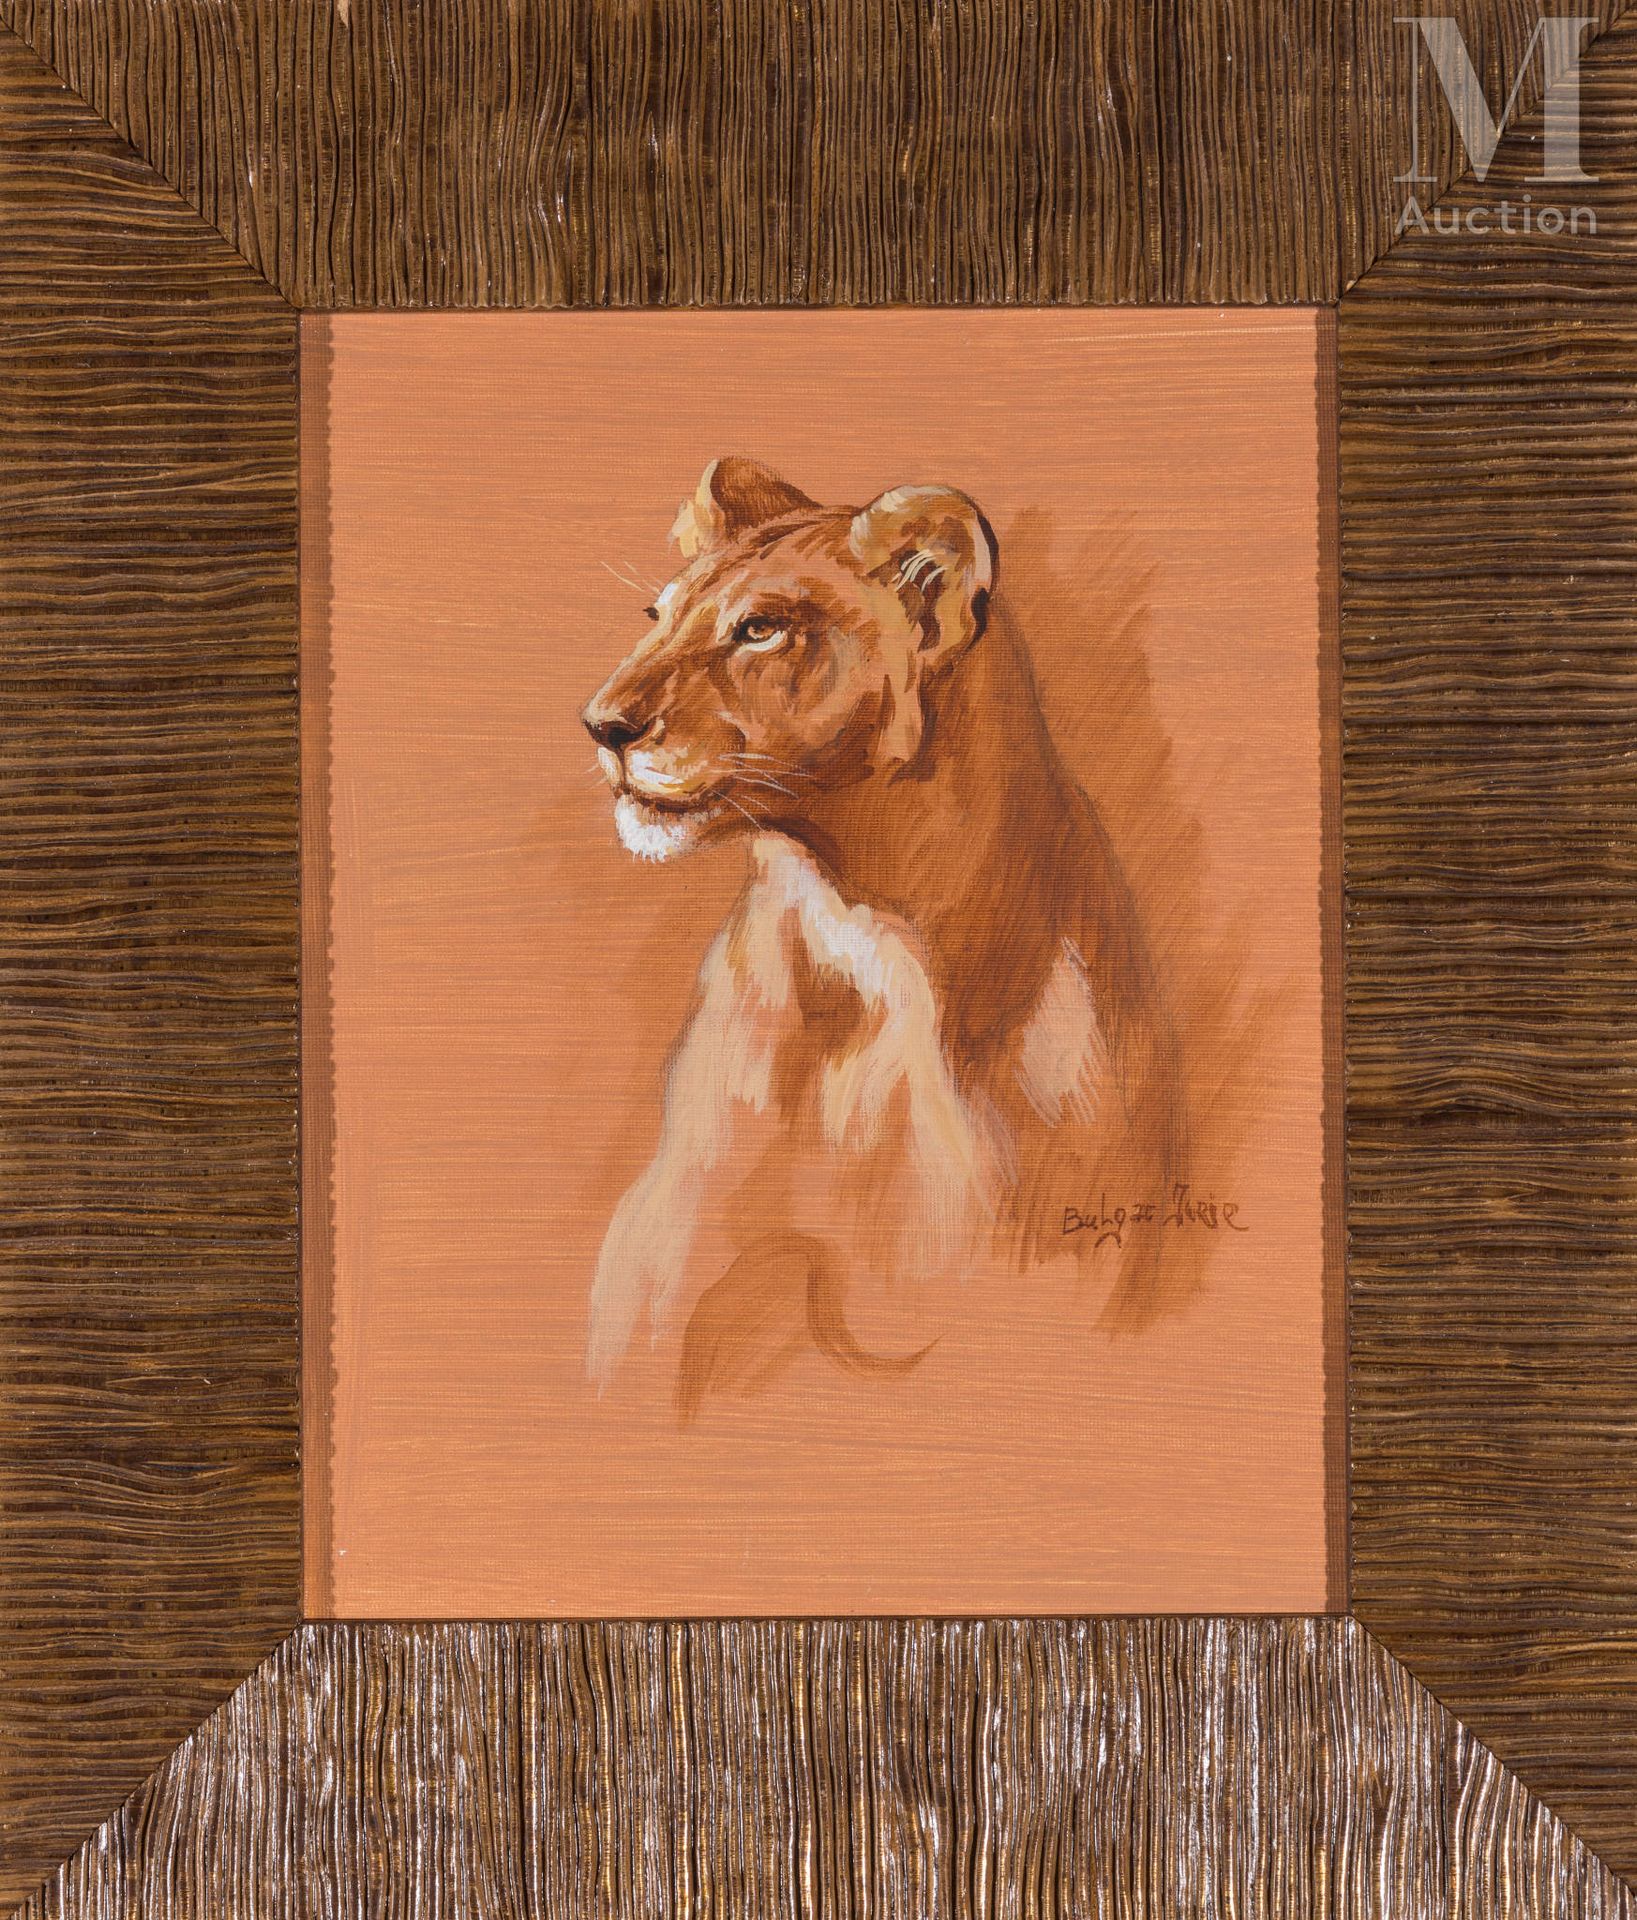 BULG.H JURIE Lioness
Oil on cardboard 
20 x 24 cm.